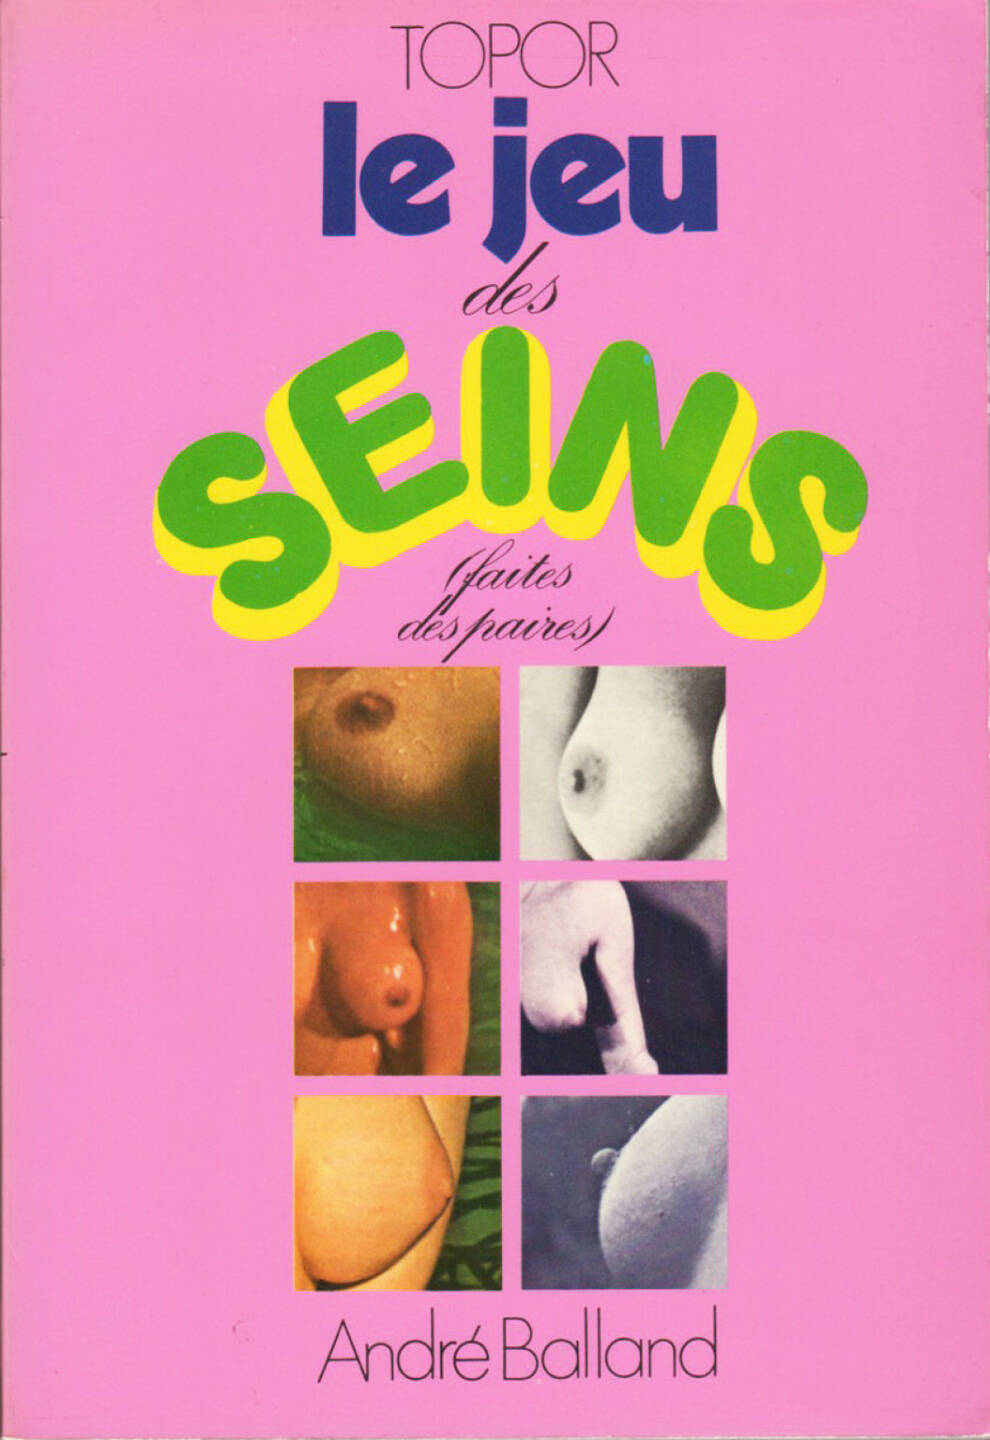 Topor - Le jeu des seins (fait des paires), Balland 1970, Cover - http://josefchladek.com/book/topor_-_le_jeu_des_seins_fait_des_paires